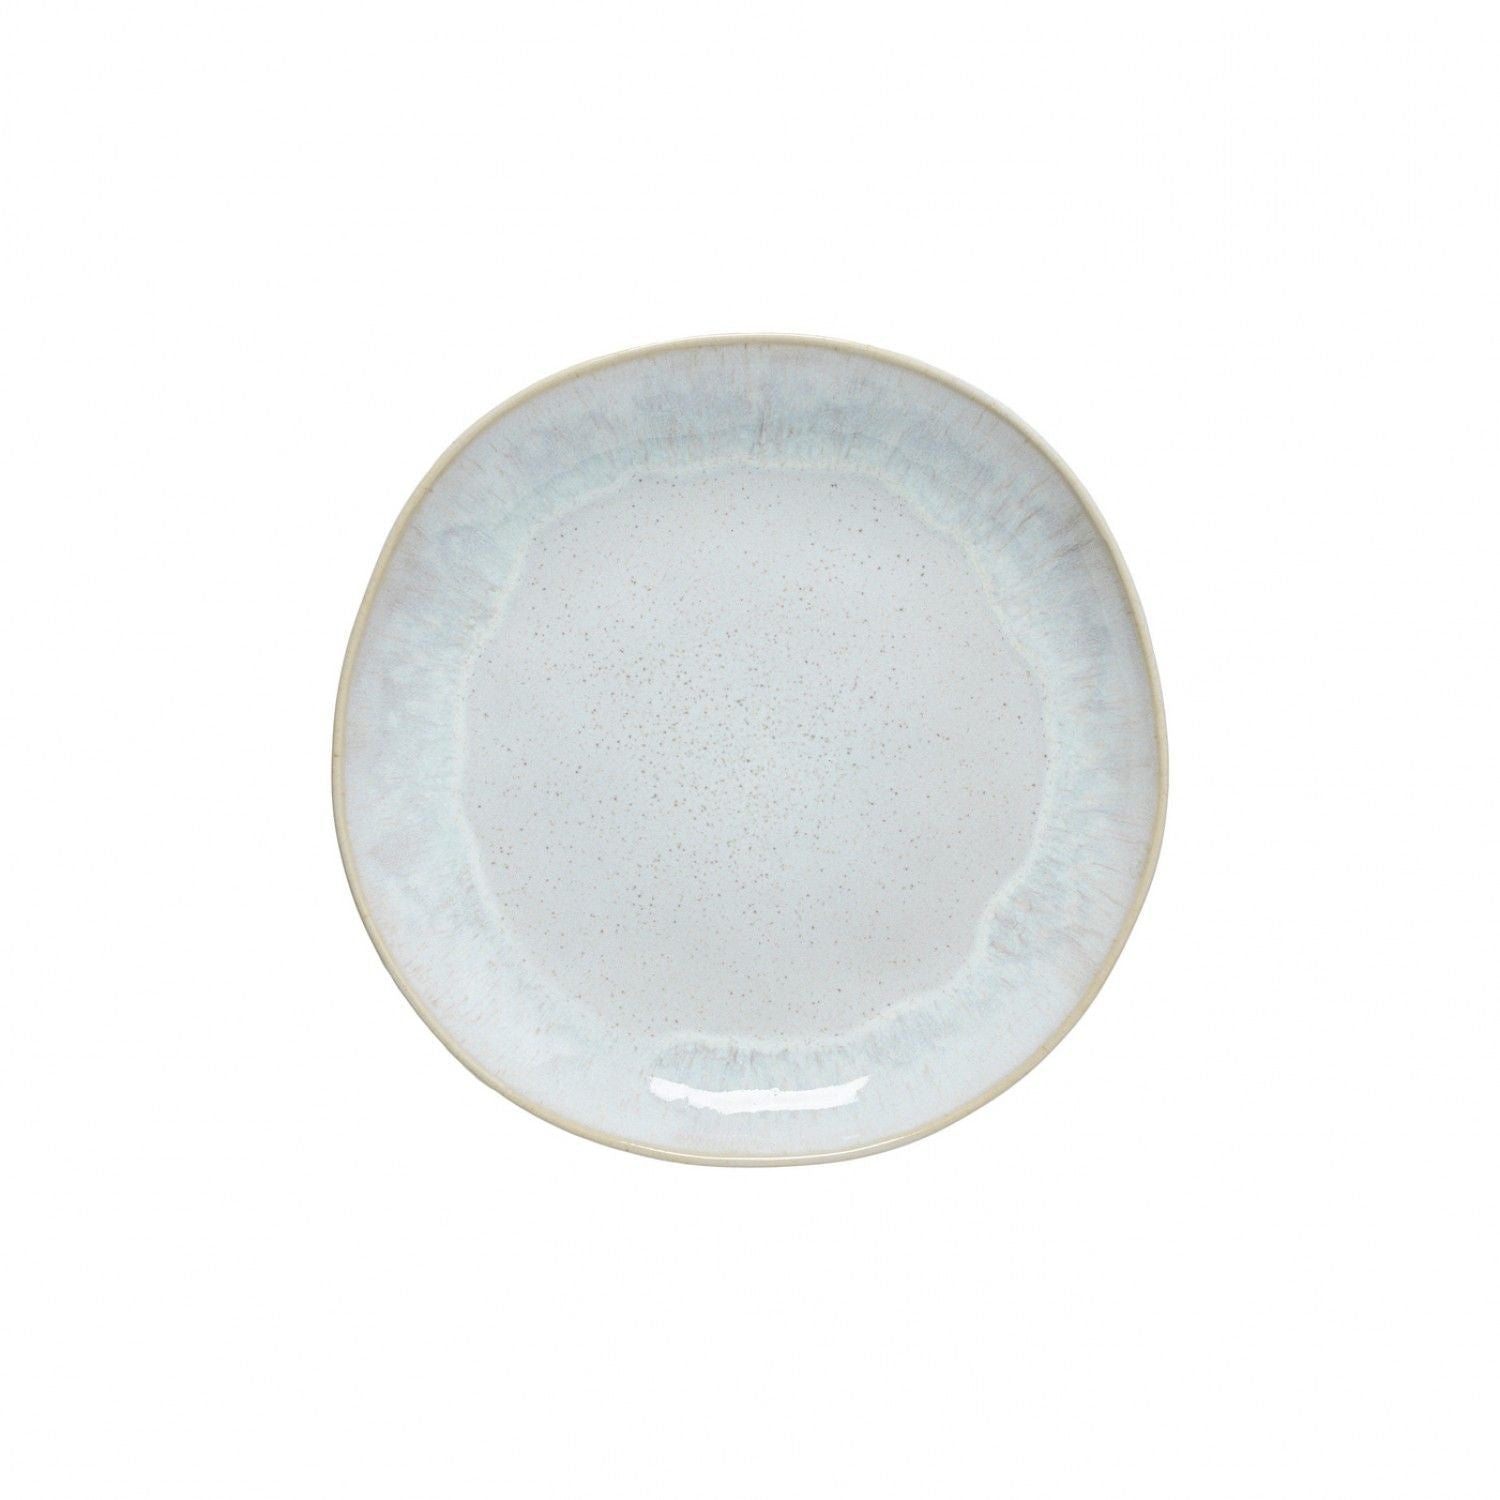 Eivissa Reactive Glaze Side Plate, Set of 6